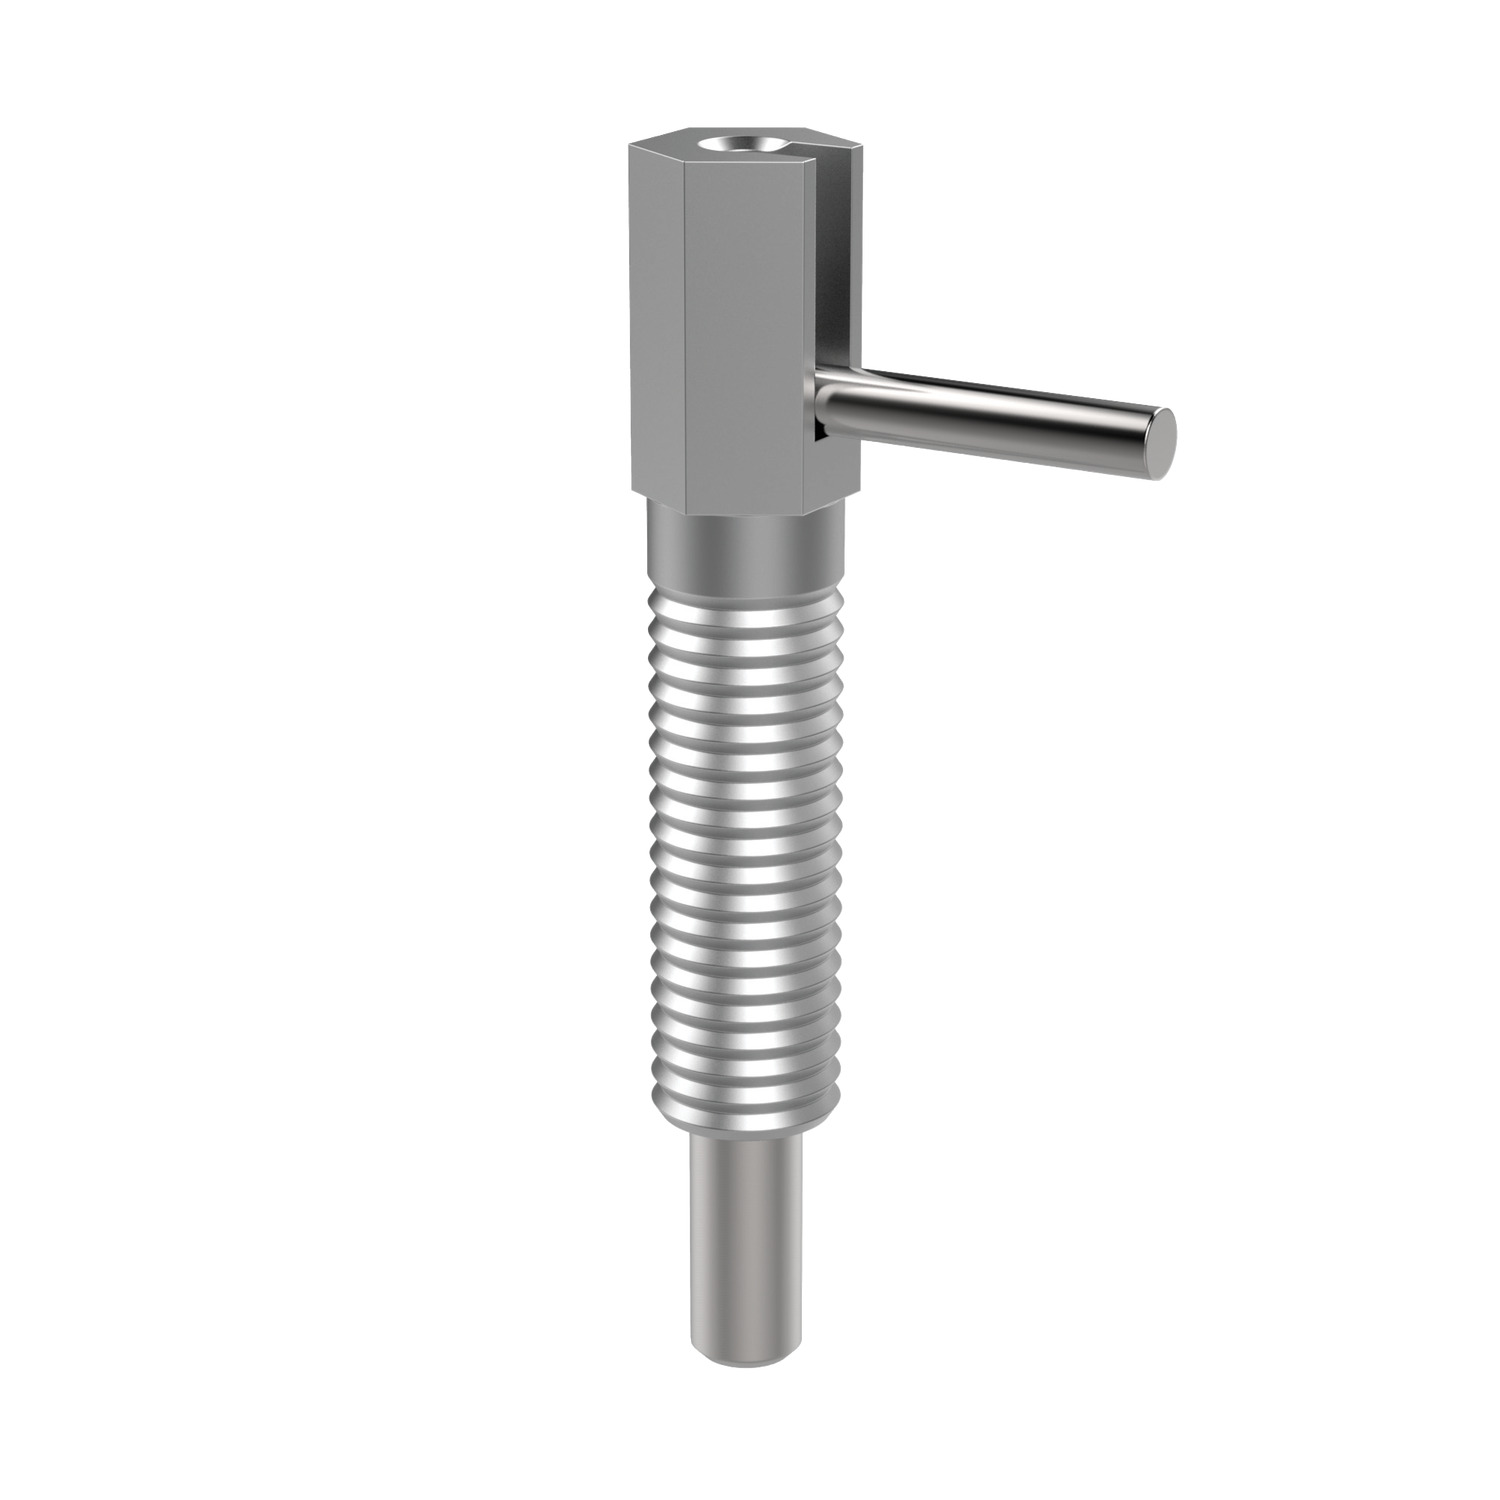 Product 32555, Index Plungers - Lever Grip locking - coarse thread / 